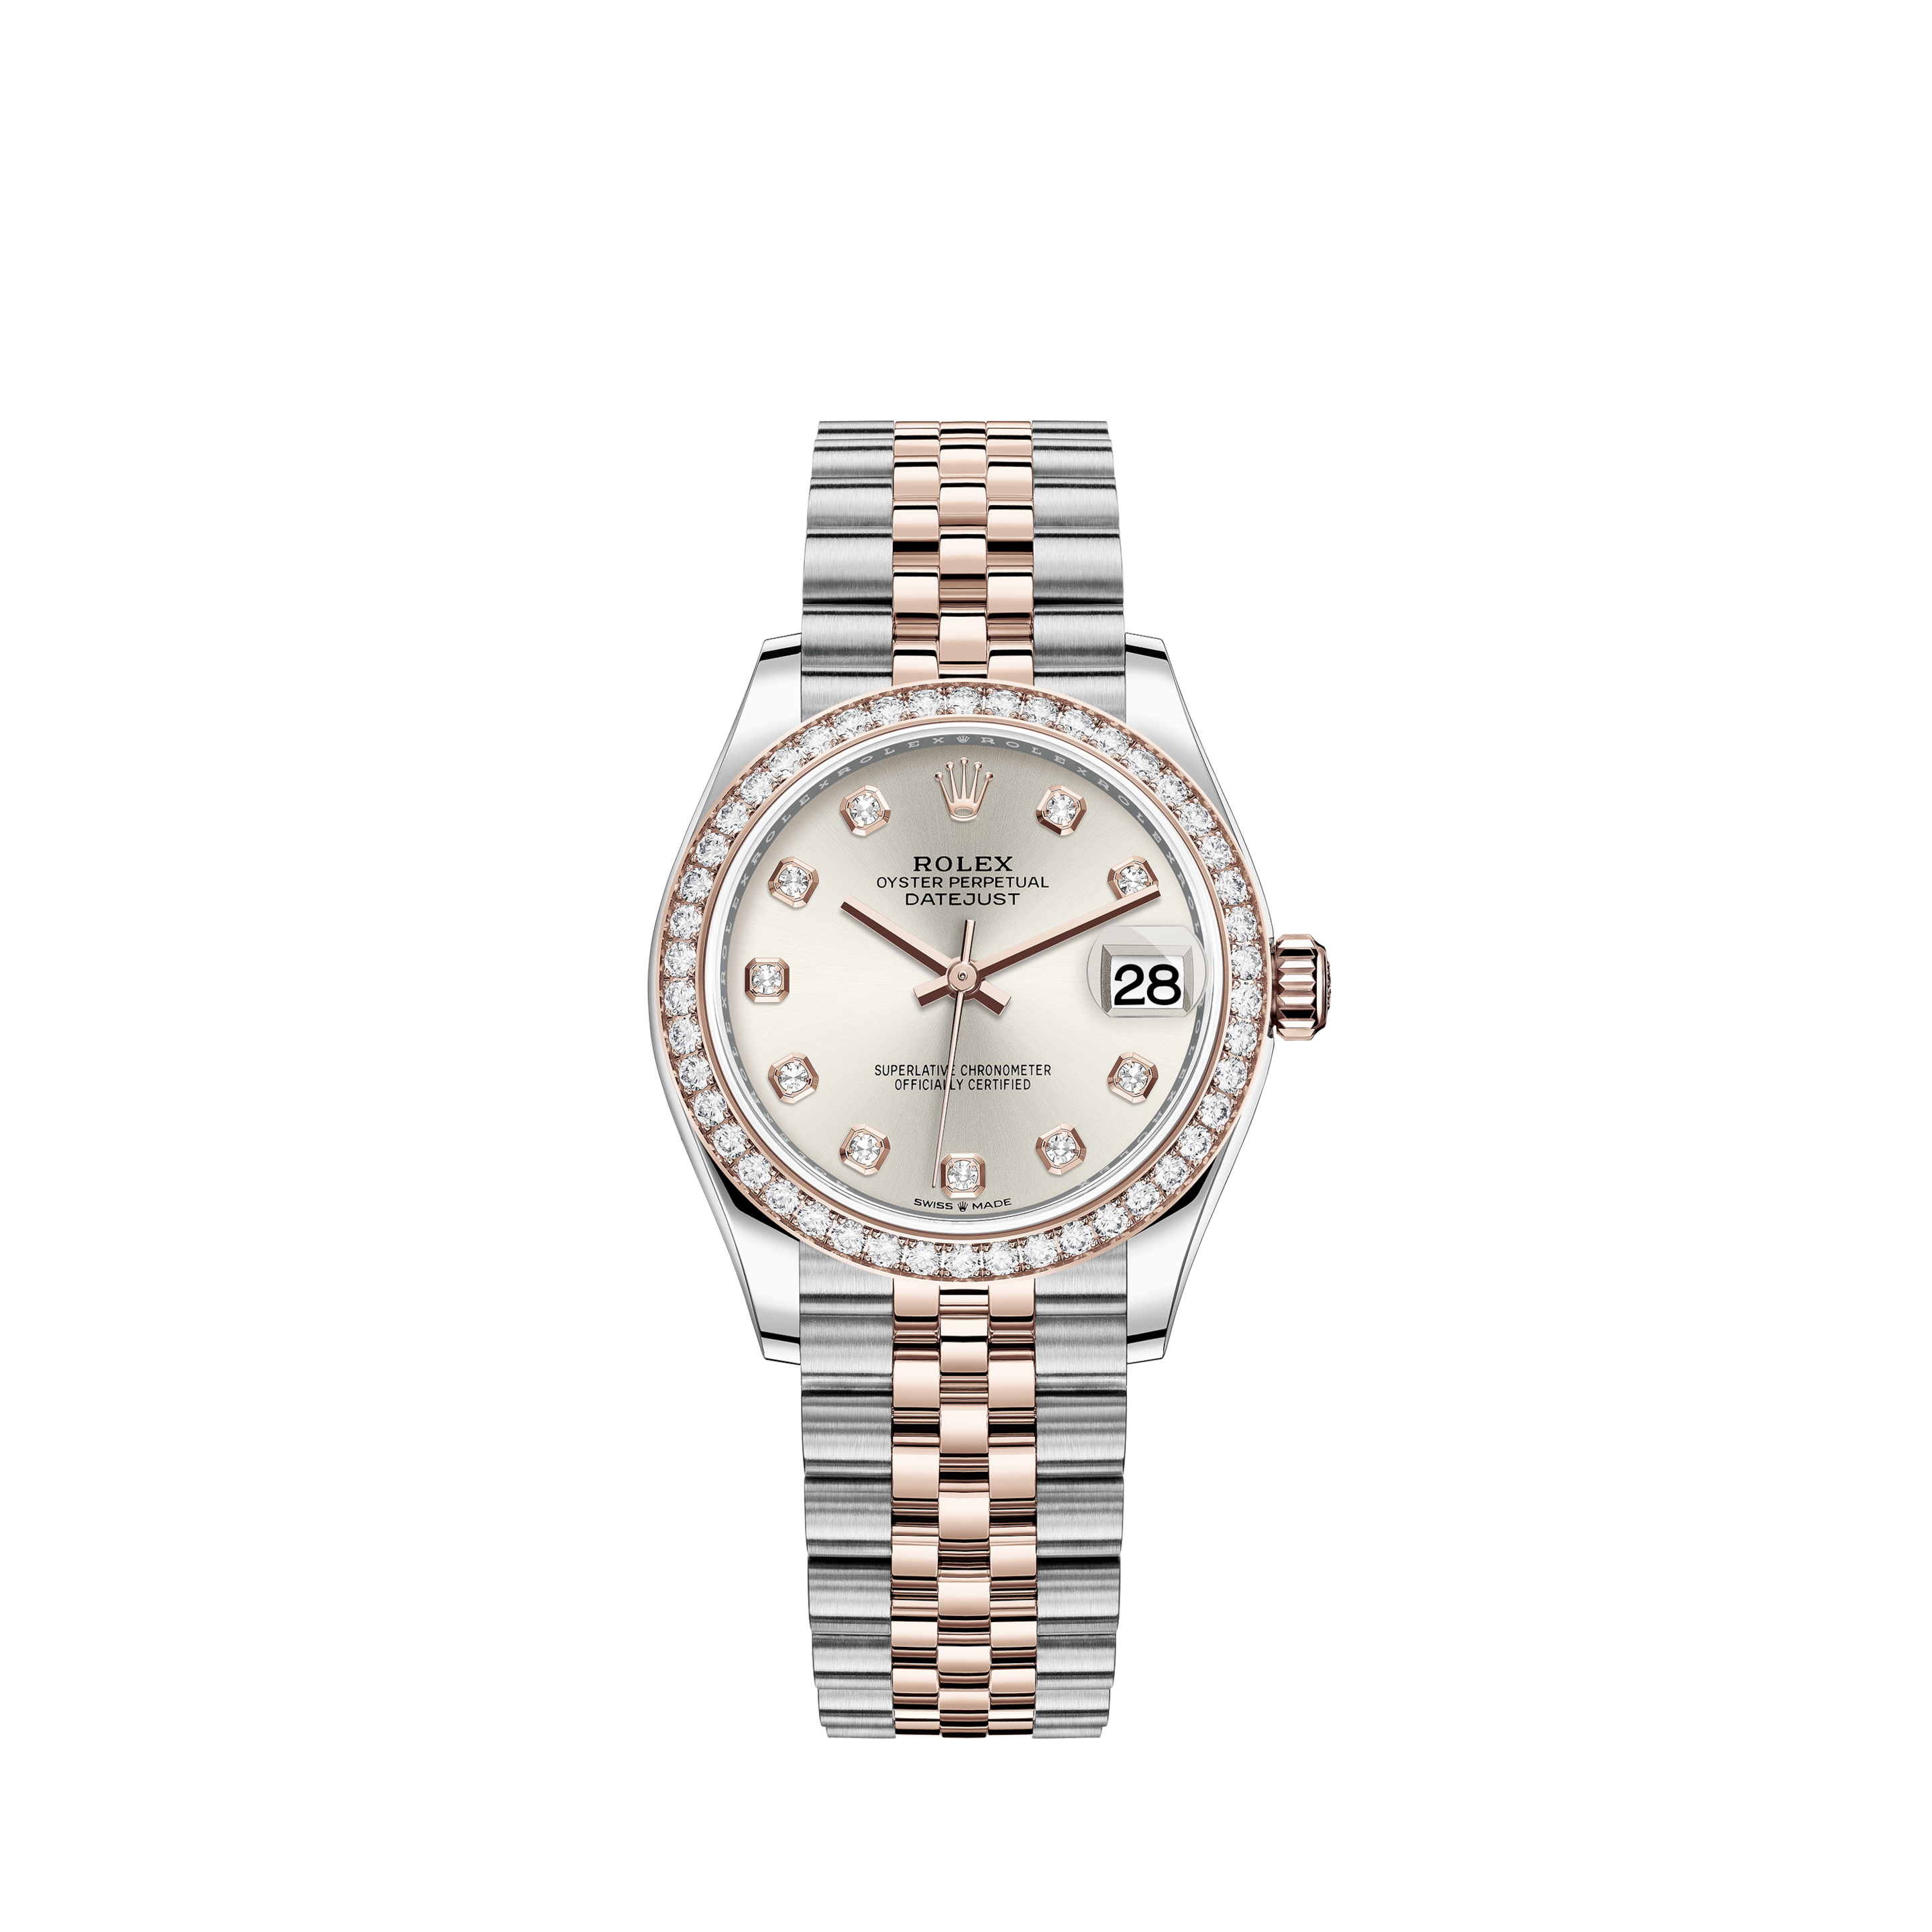 Rolex Ladies 2-Tone Datejust Watch 69173 Silver Dial